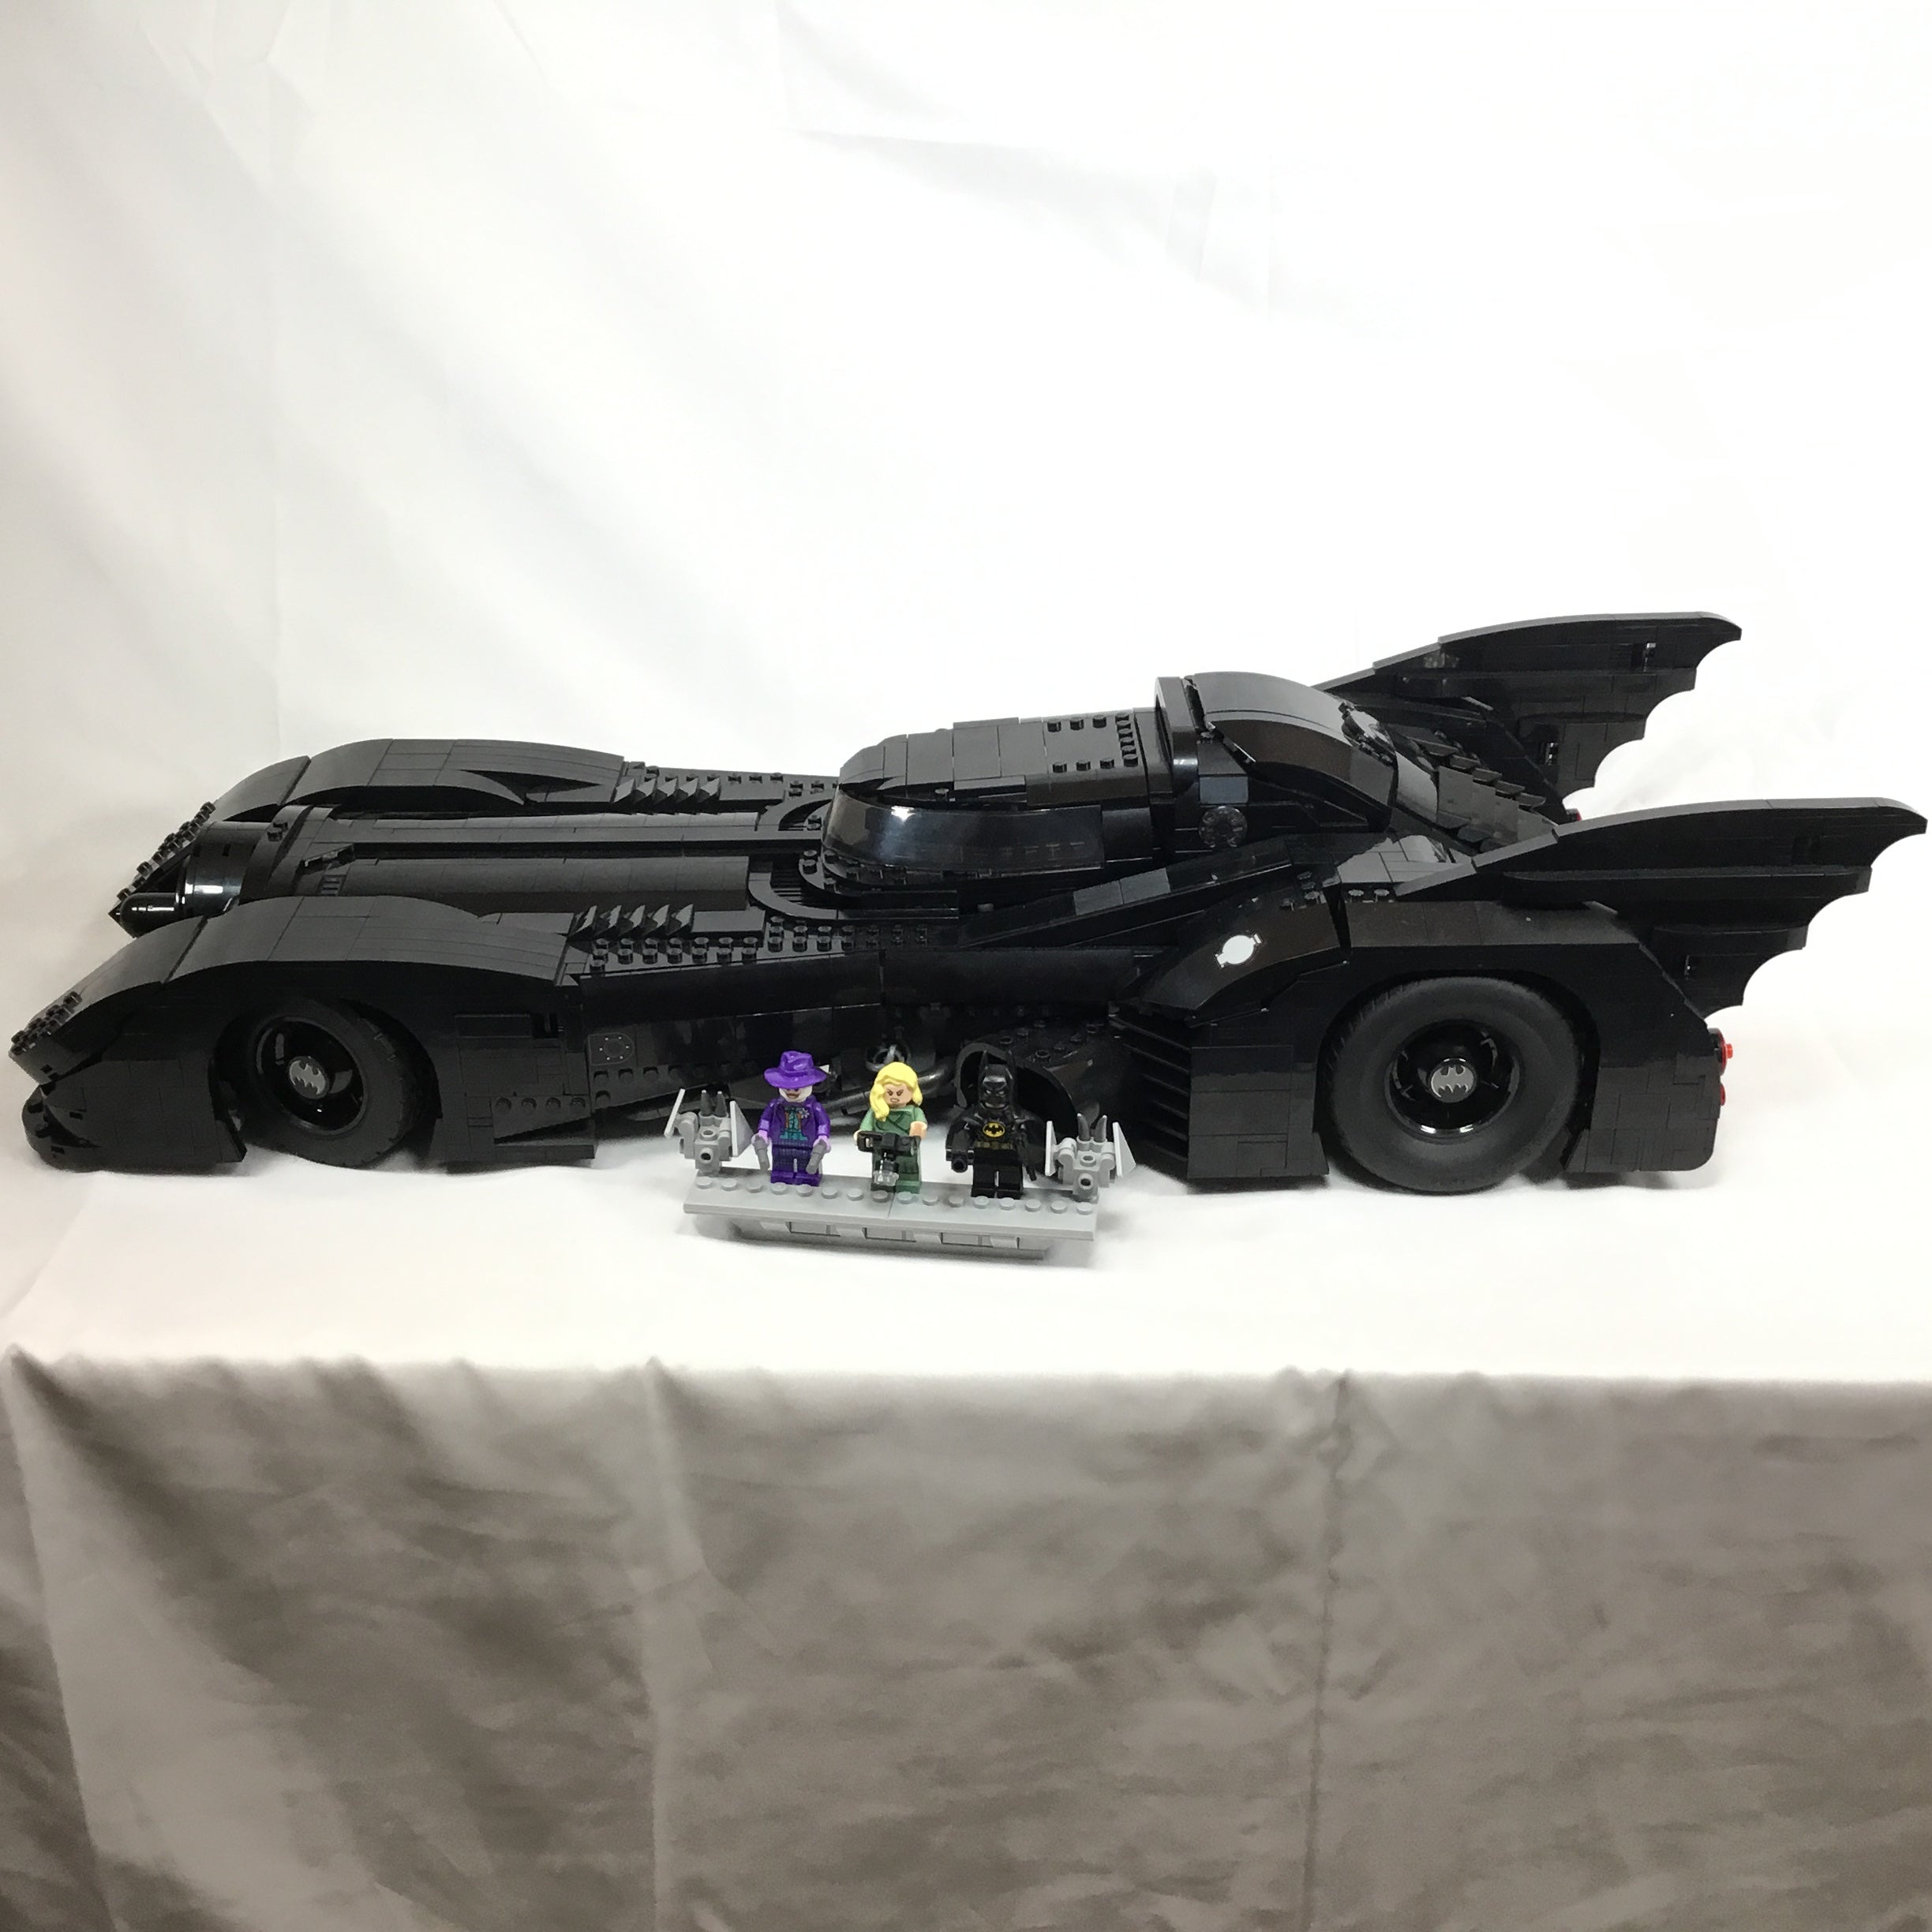  LEGO DC Batman 1989 Batmobile 76139 Building Kit